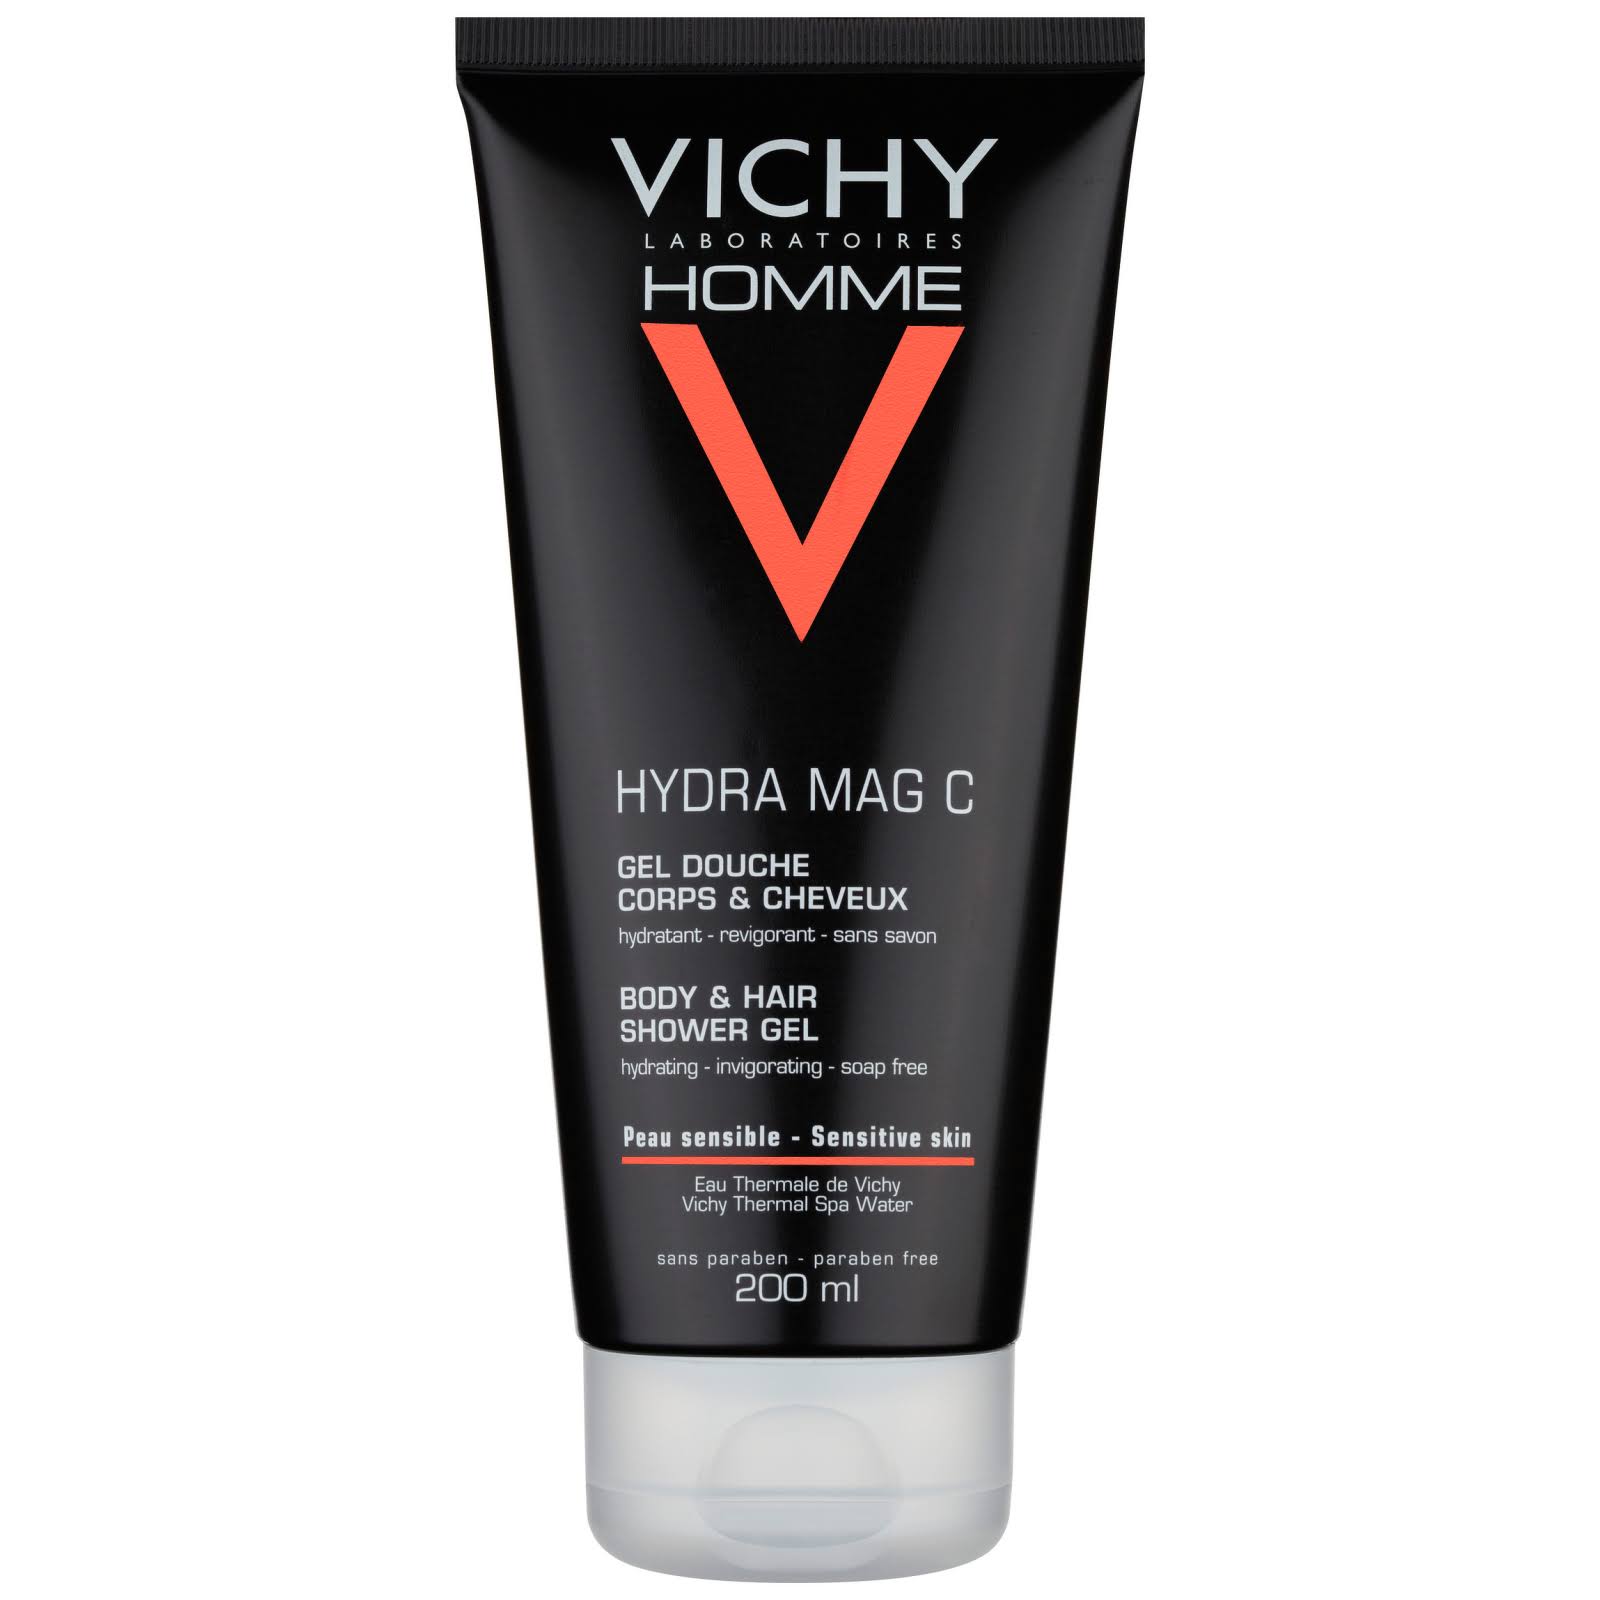 Vichy Homme Body & Hair Shower Gel - 200ml